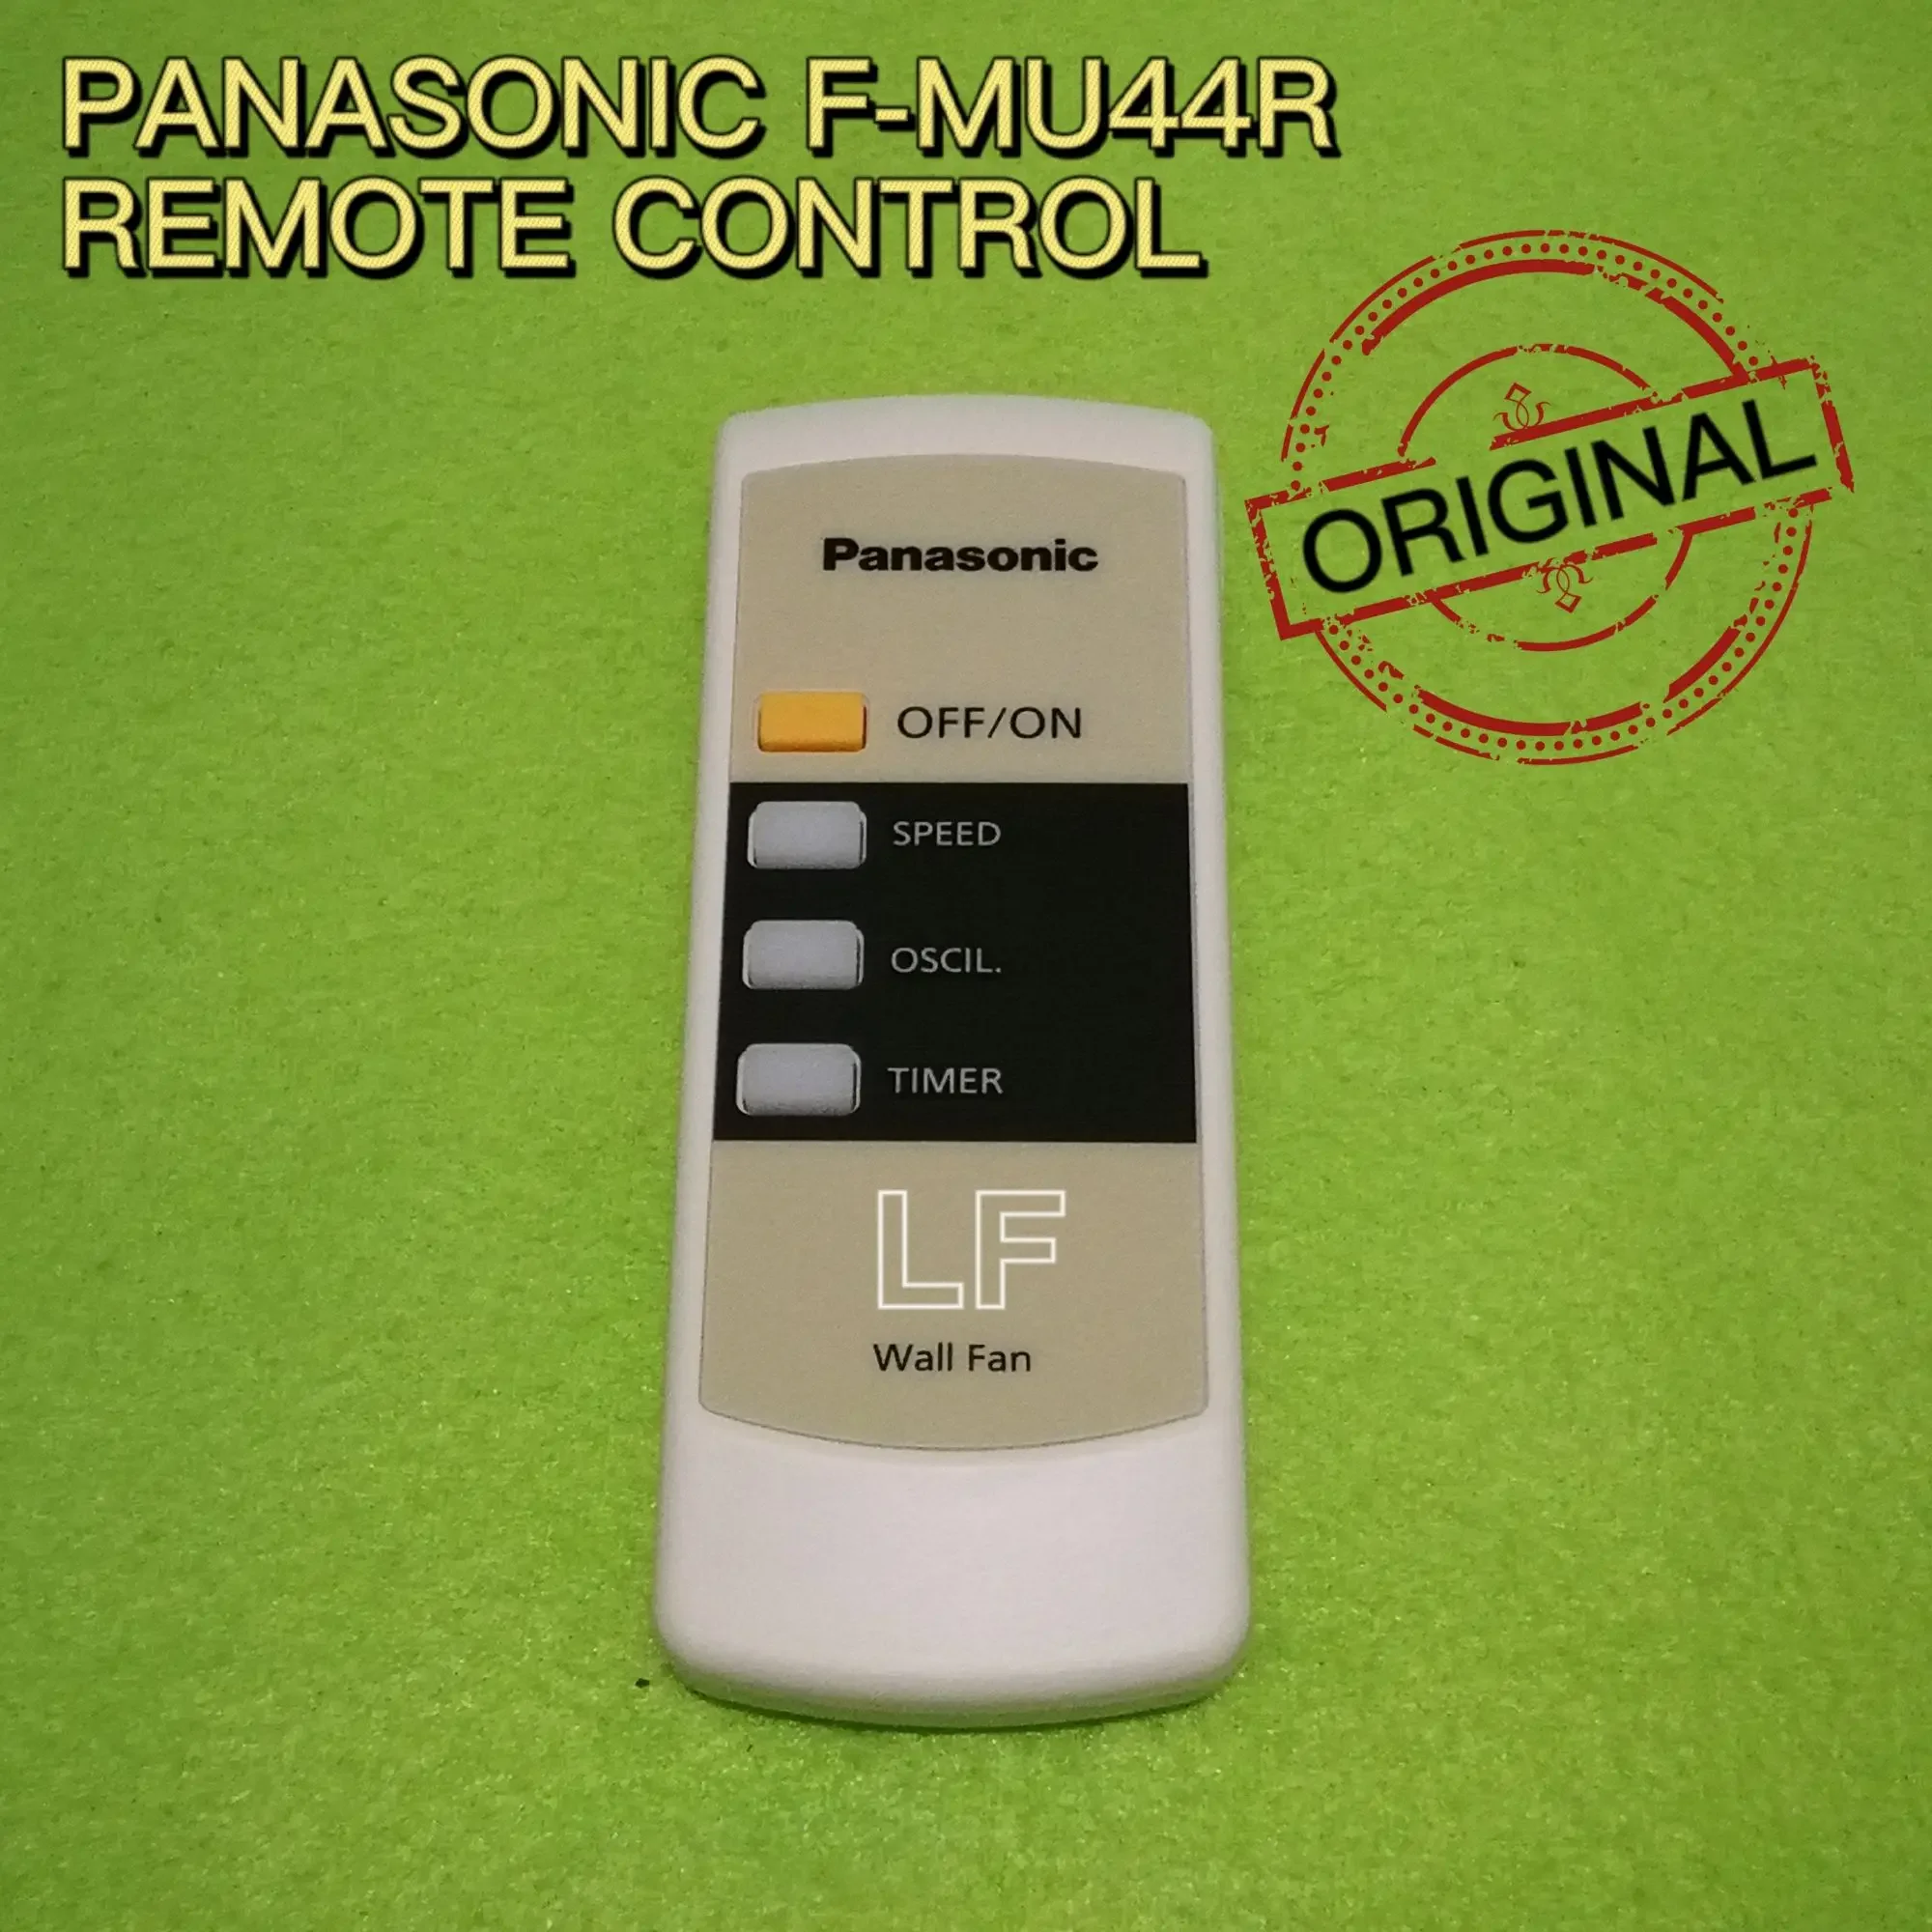 Panasonic / KDK wall fan remote control F-MU44R (ORIGINAL)